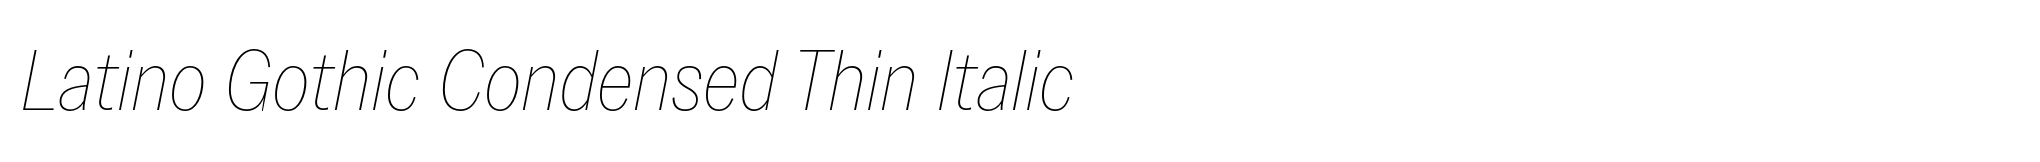 Latino Gothic Condensed Thin Italic image